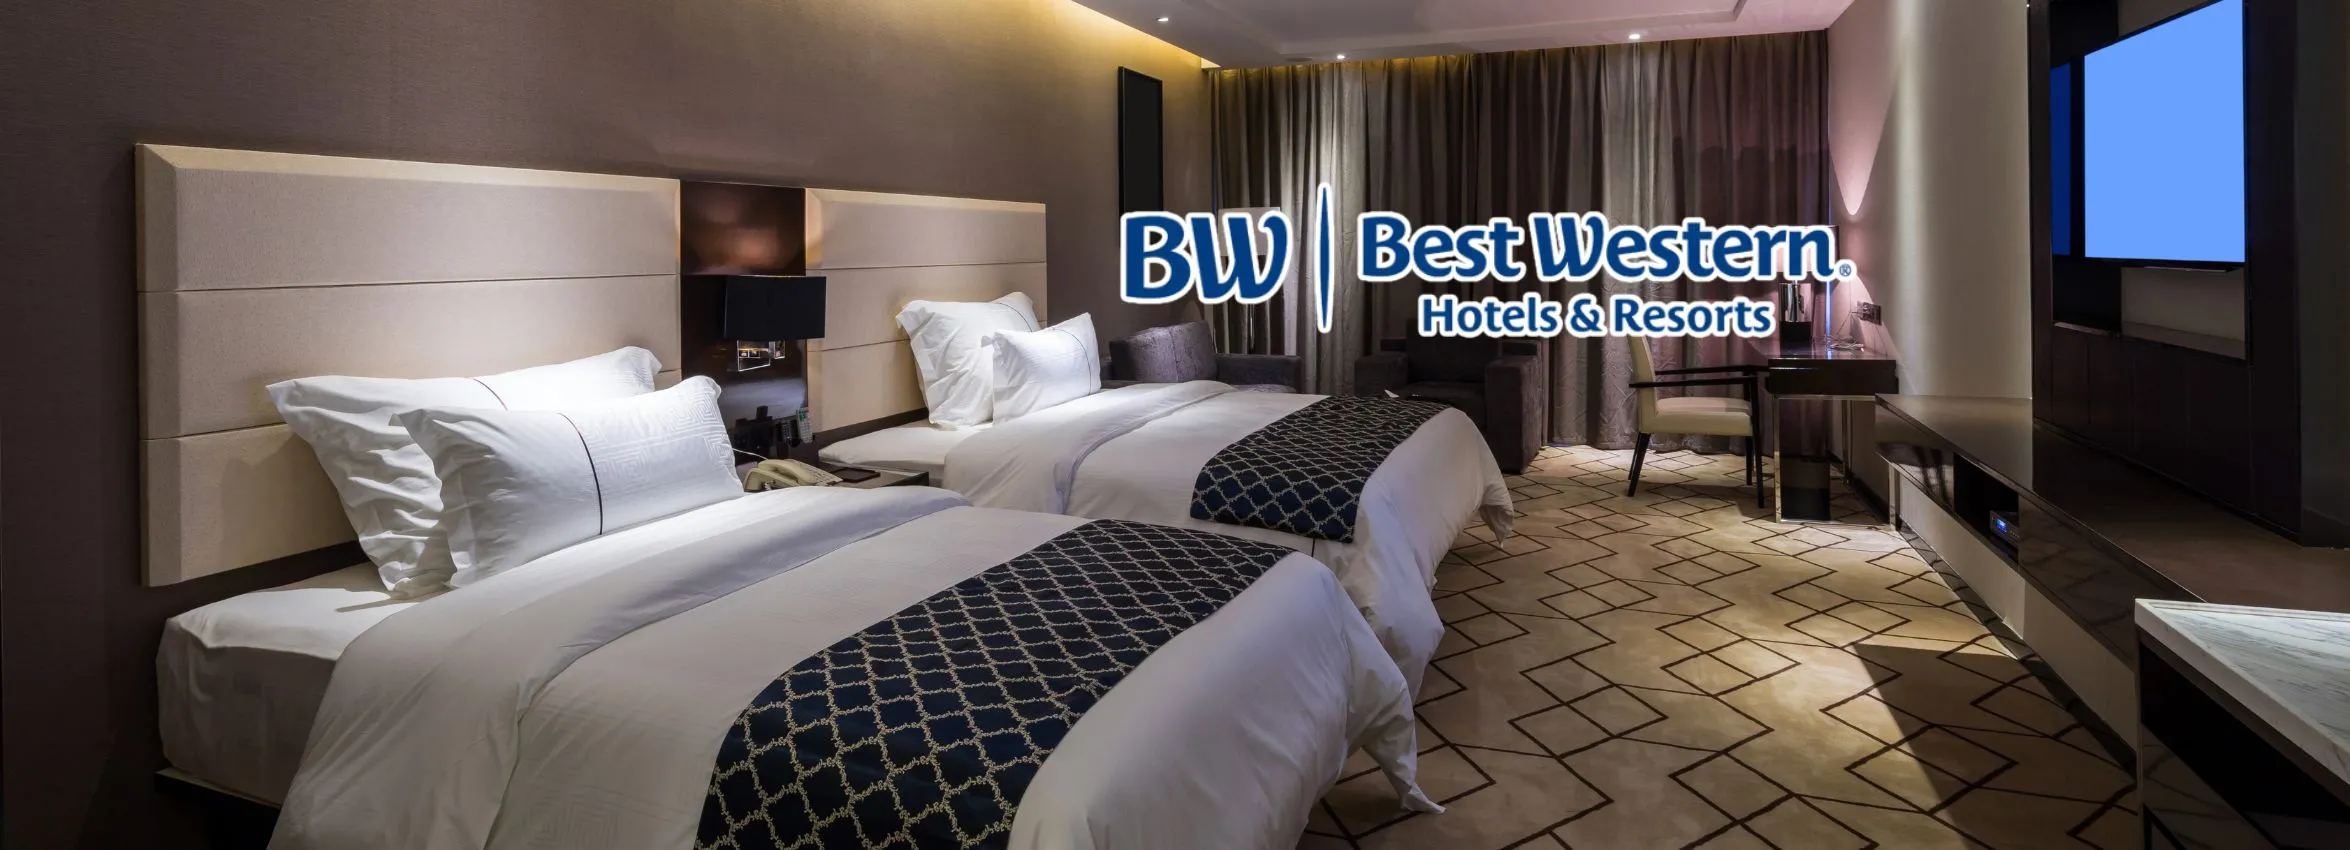 Best-Western-Hotel_Desktop_ET